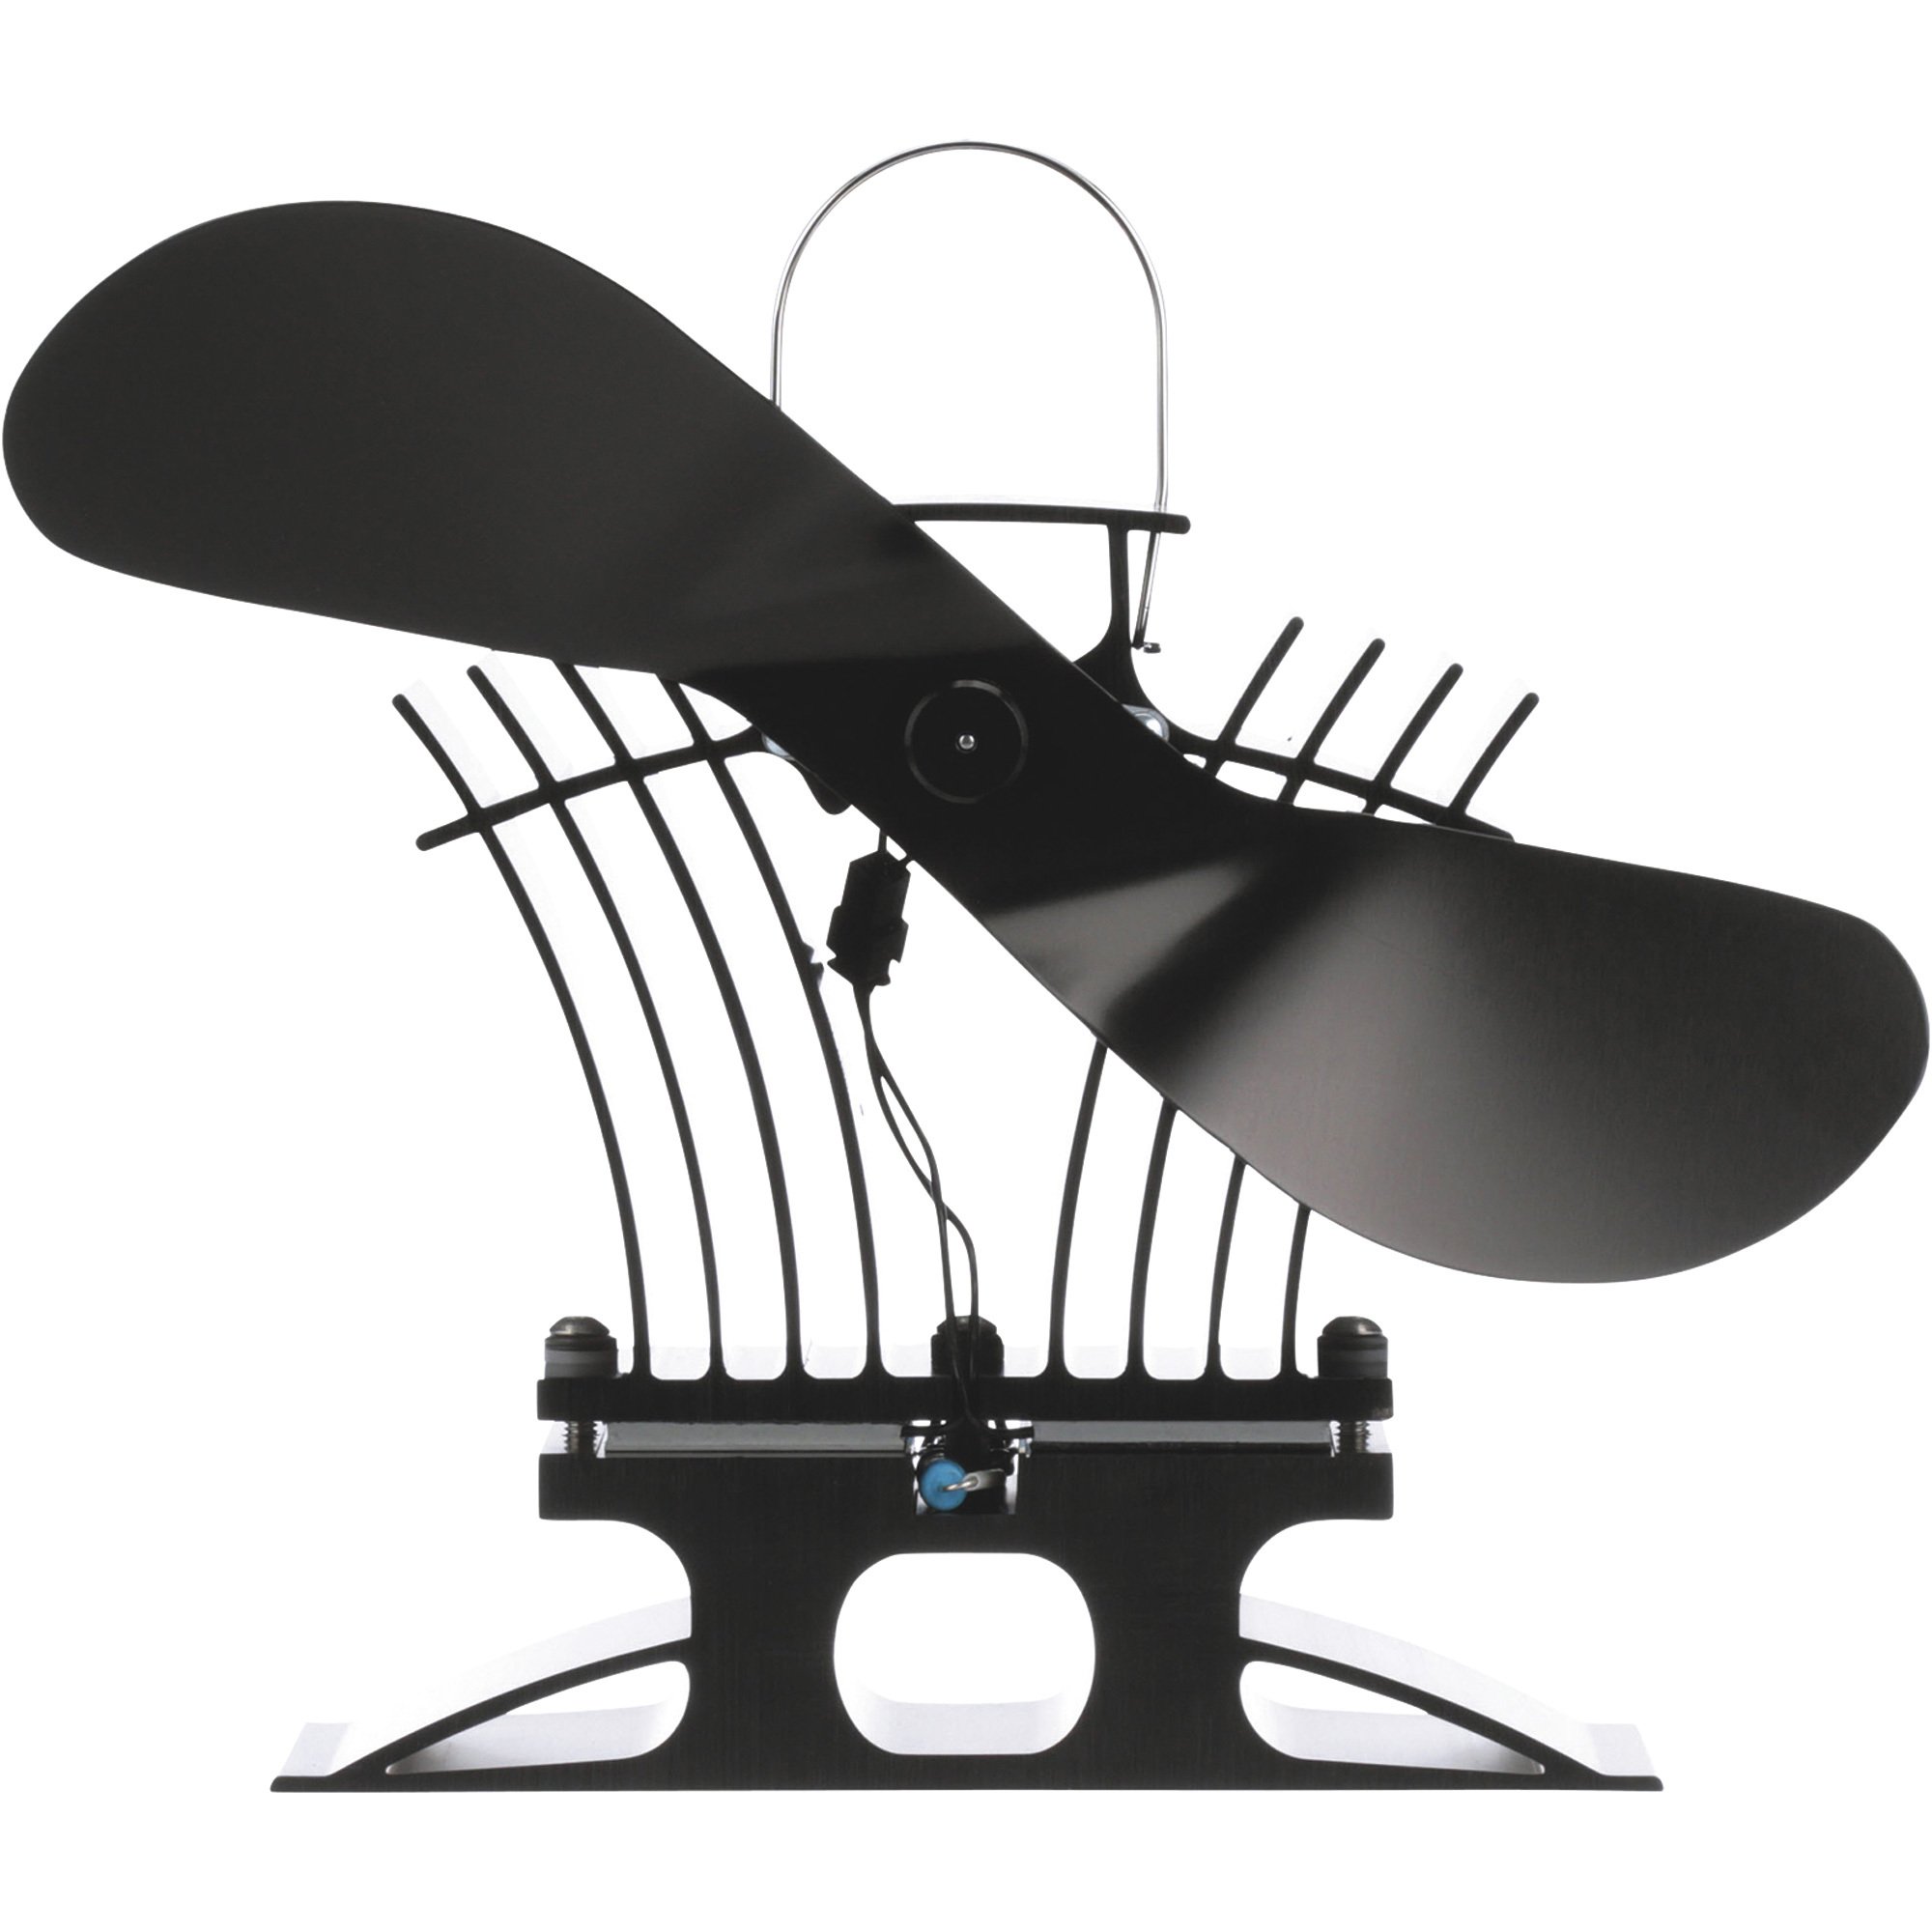 Ecofan BelAir Heat-Powered Stove Fan For Low Temp Stoves —140 CFM ...